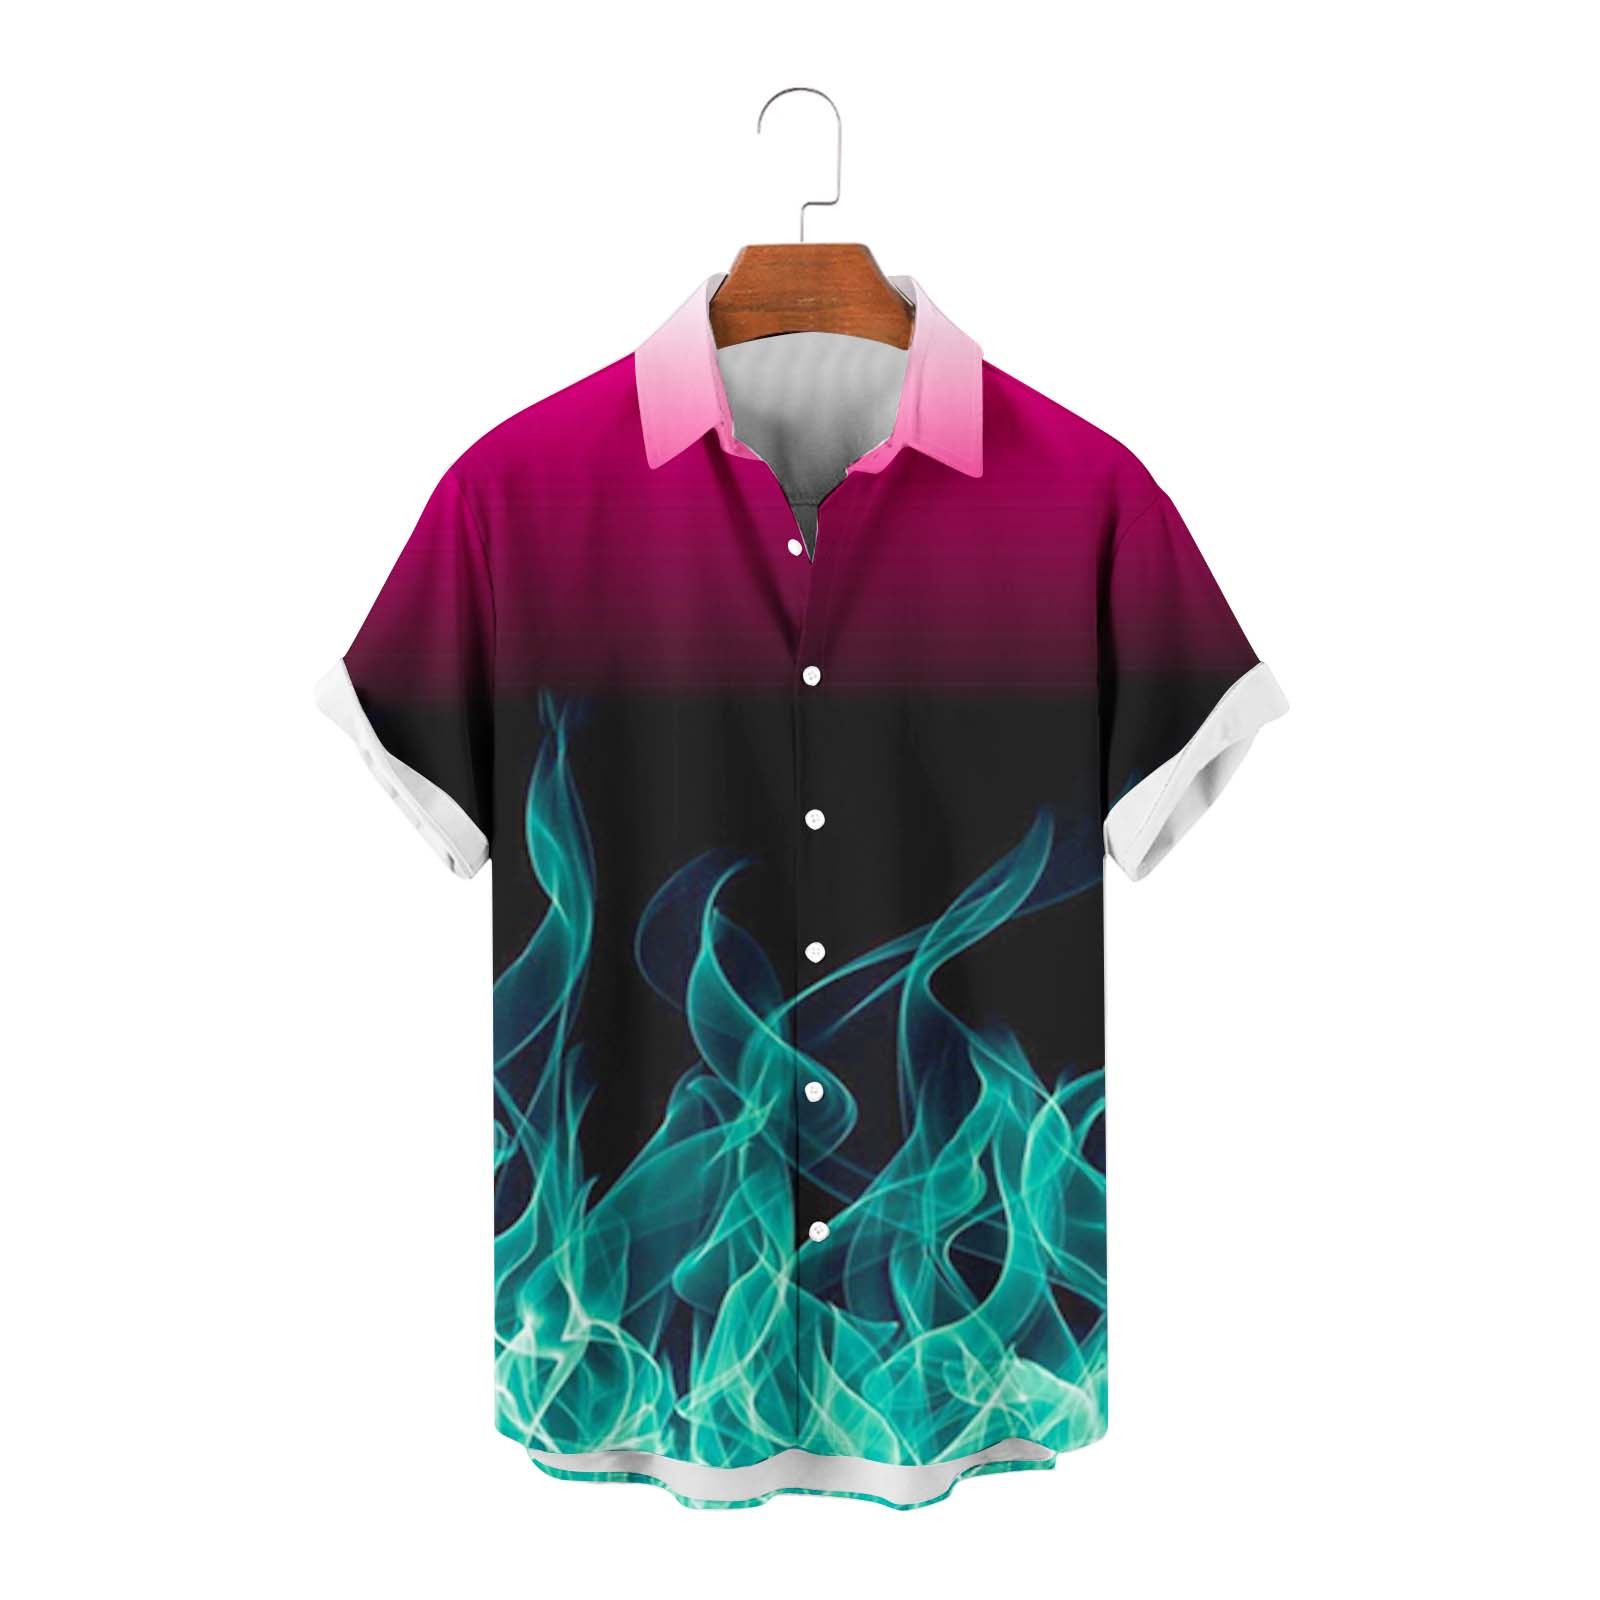 QIPOPIQ Men's Short Sleeve Turndown Collar Shirts Men 3D Fire Pattern Hawaiian Shirt Summer Fashion Printed Have Pockets Button Shirt Tops Tees Shirt Gift for Father & Him 2023 Deals Green 2XL - image 2 of 4